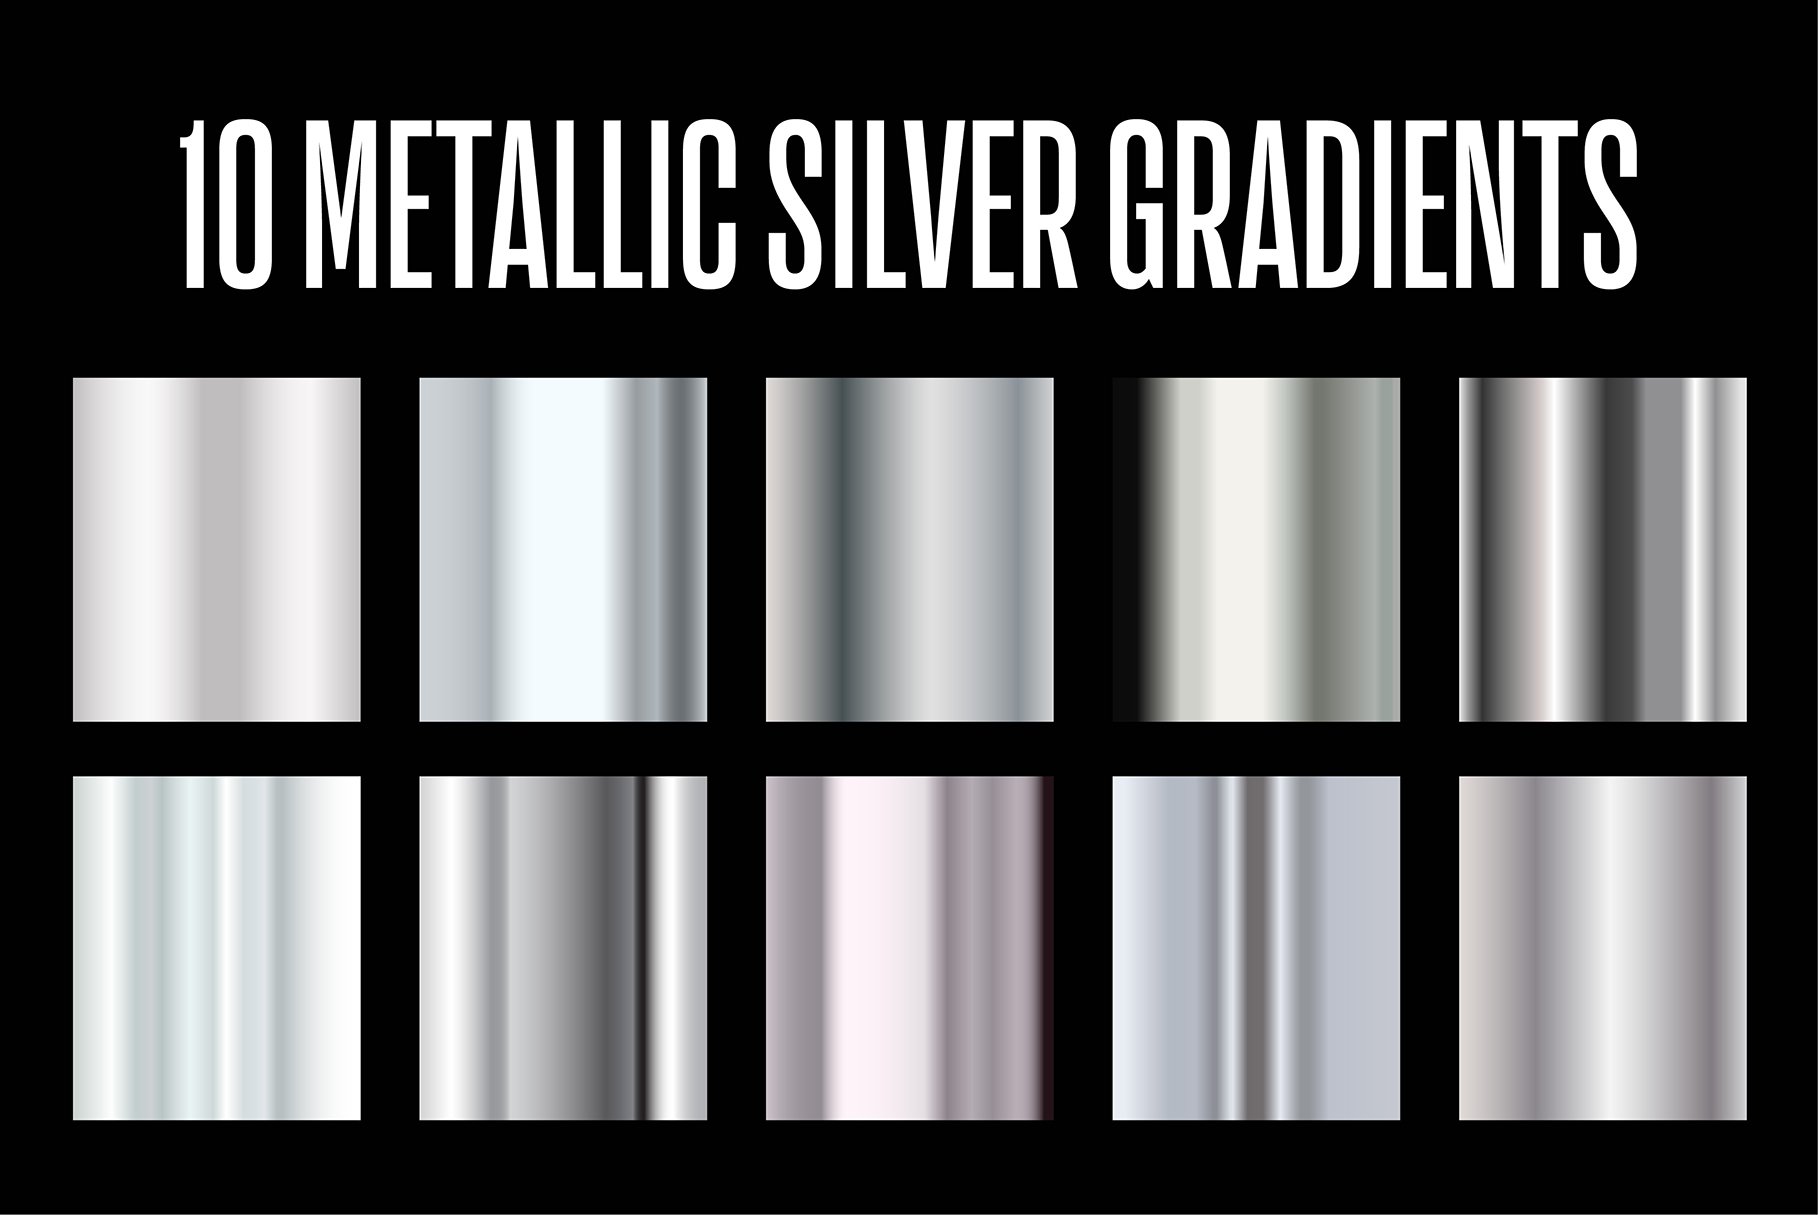 10 Metallic Silver Gradients .AIcover image.